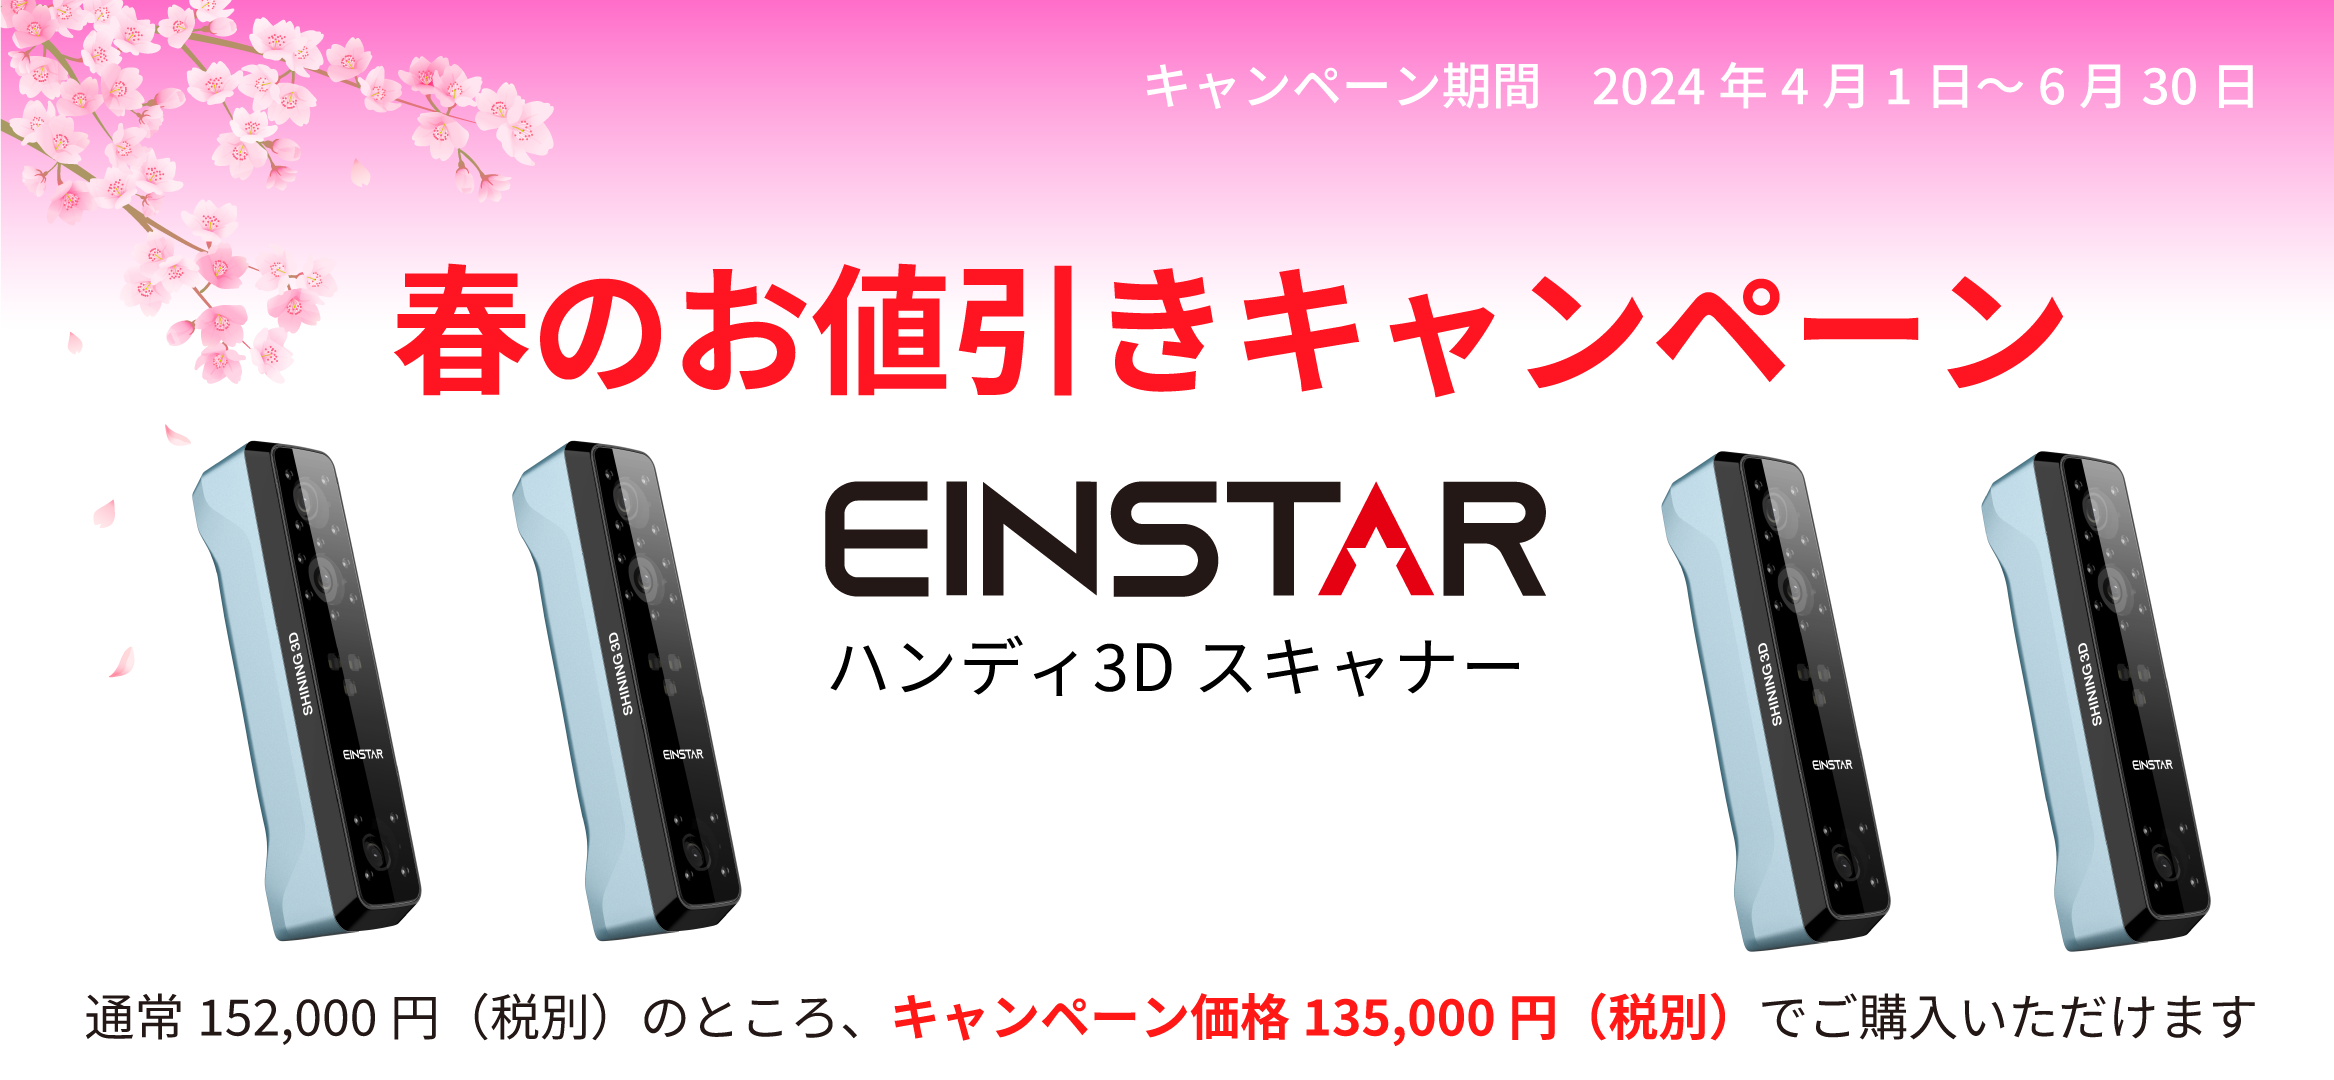 3Dスキャナ Einstar 春のお値引きキャンペーン